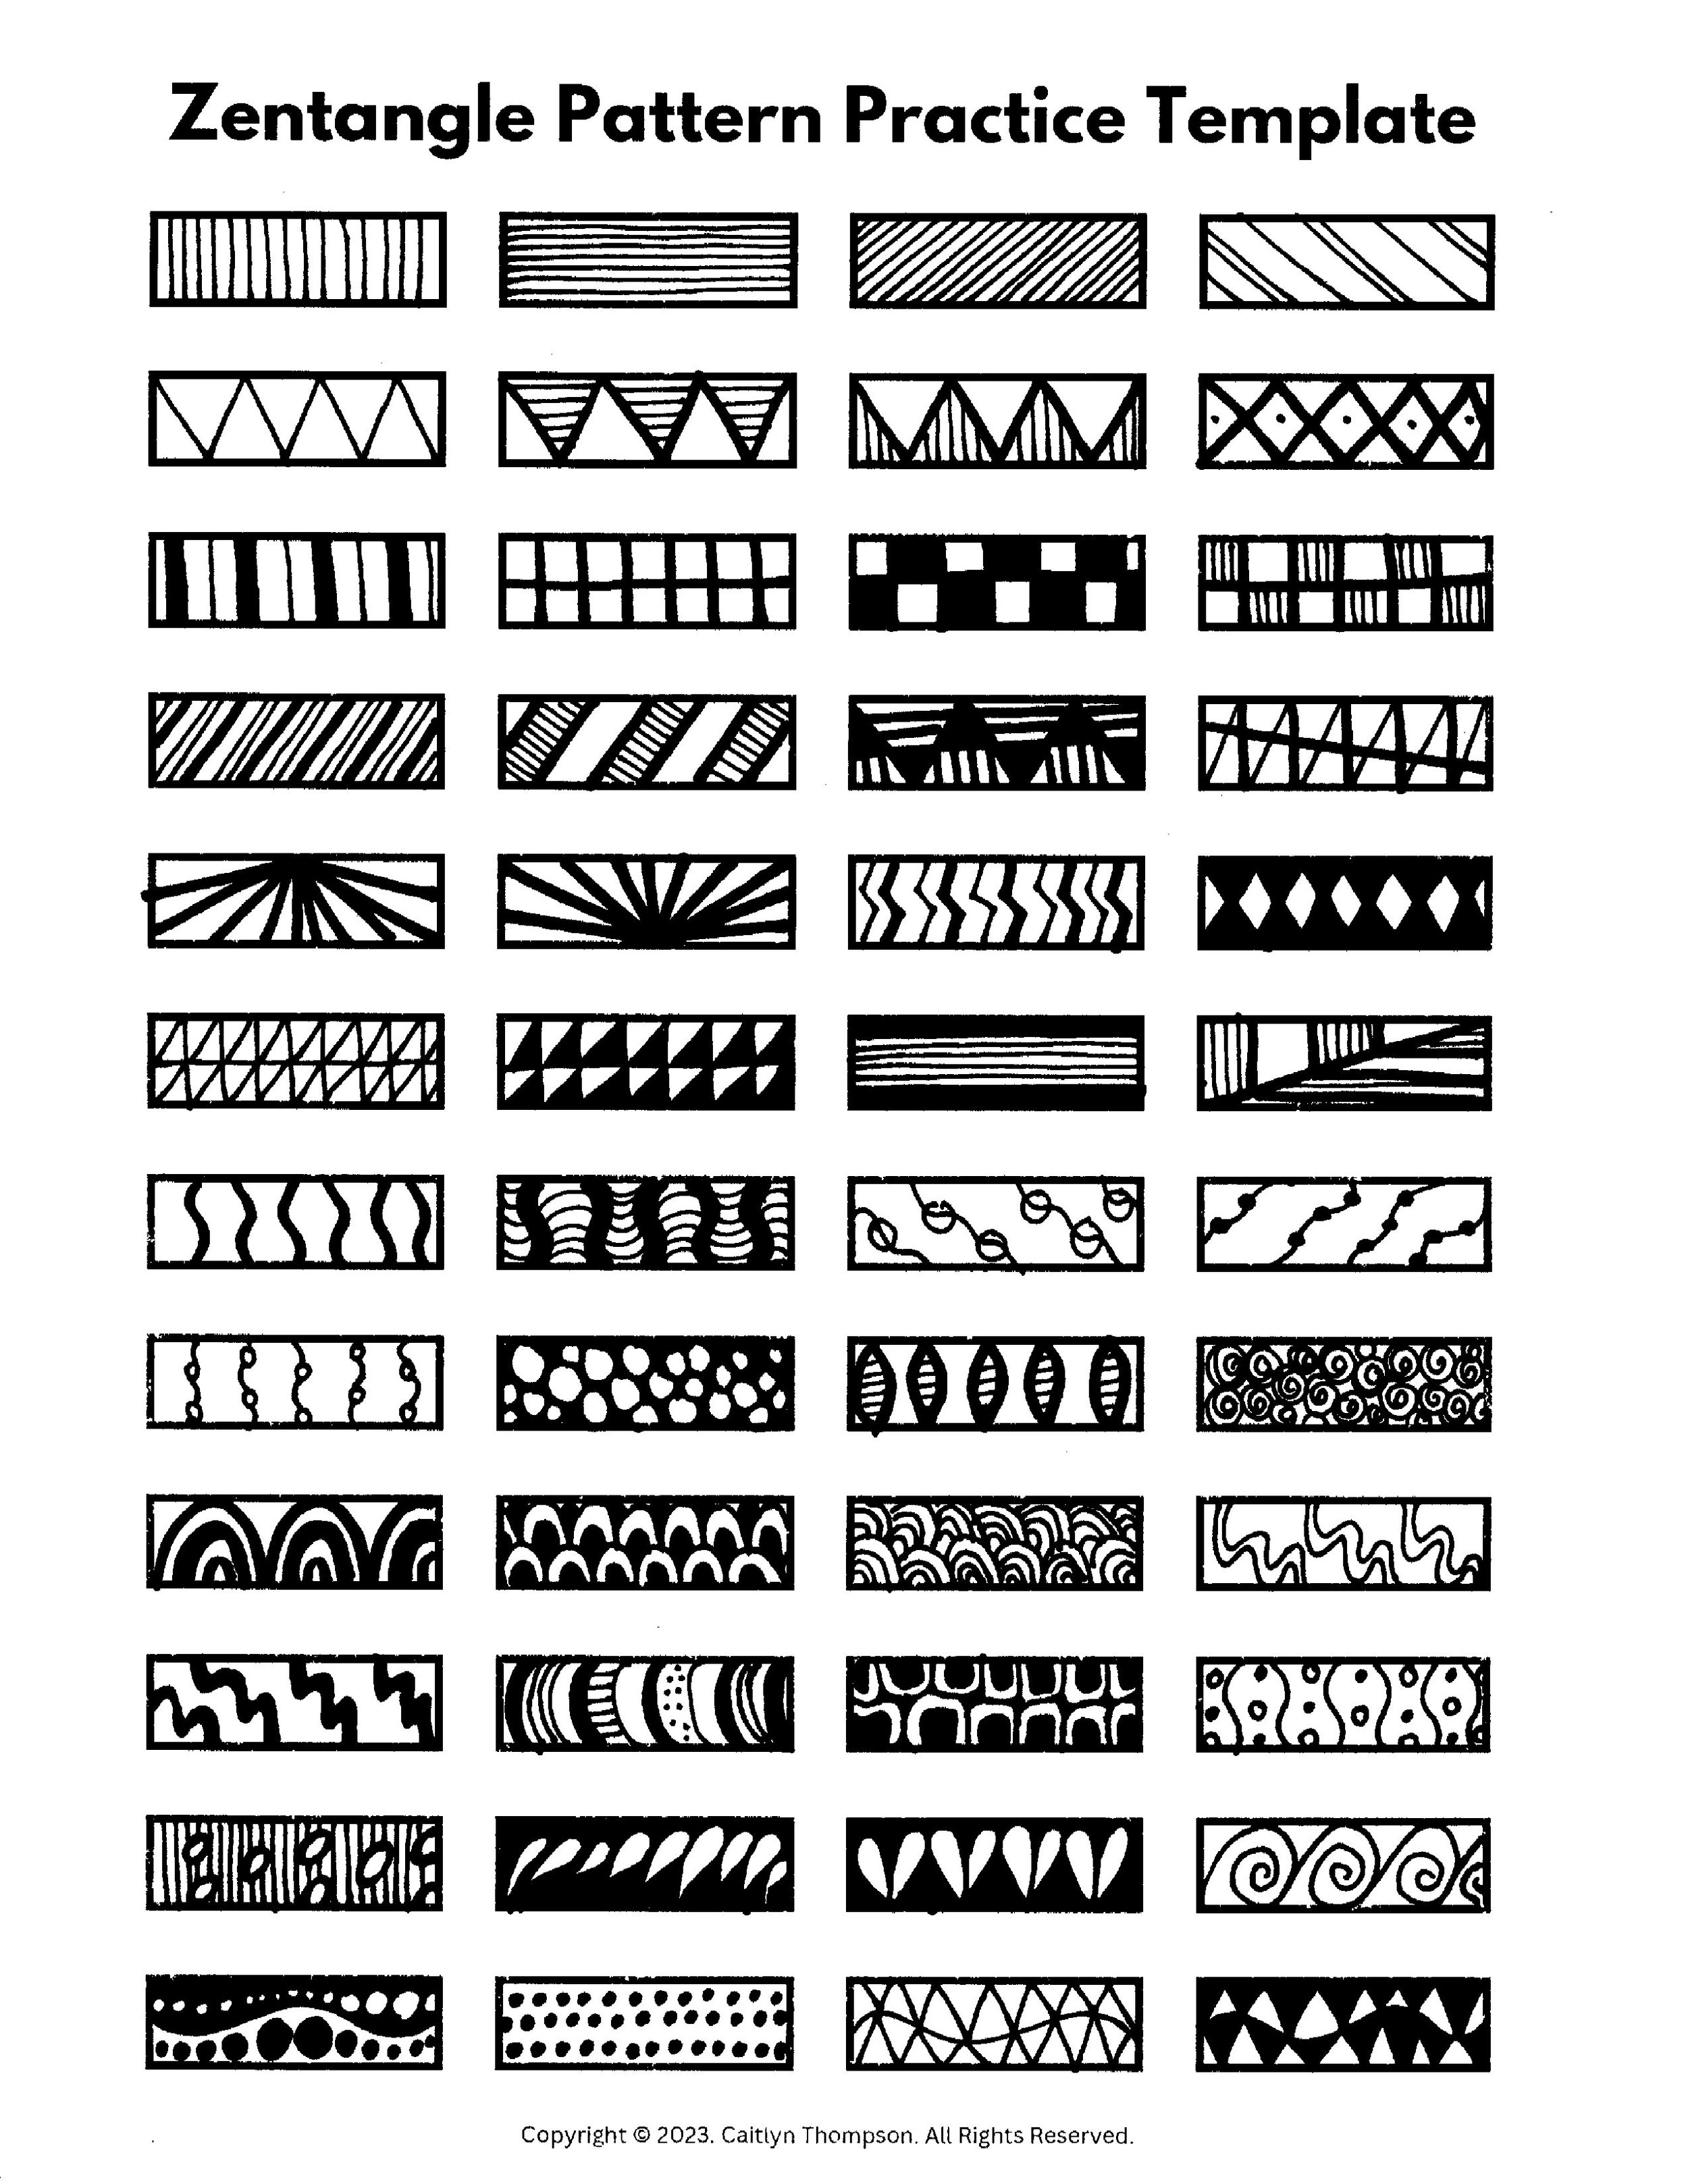 Zentangle Patterns.jpg